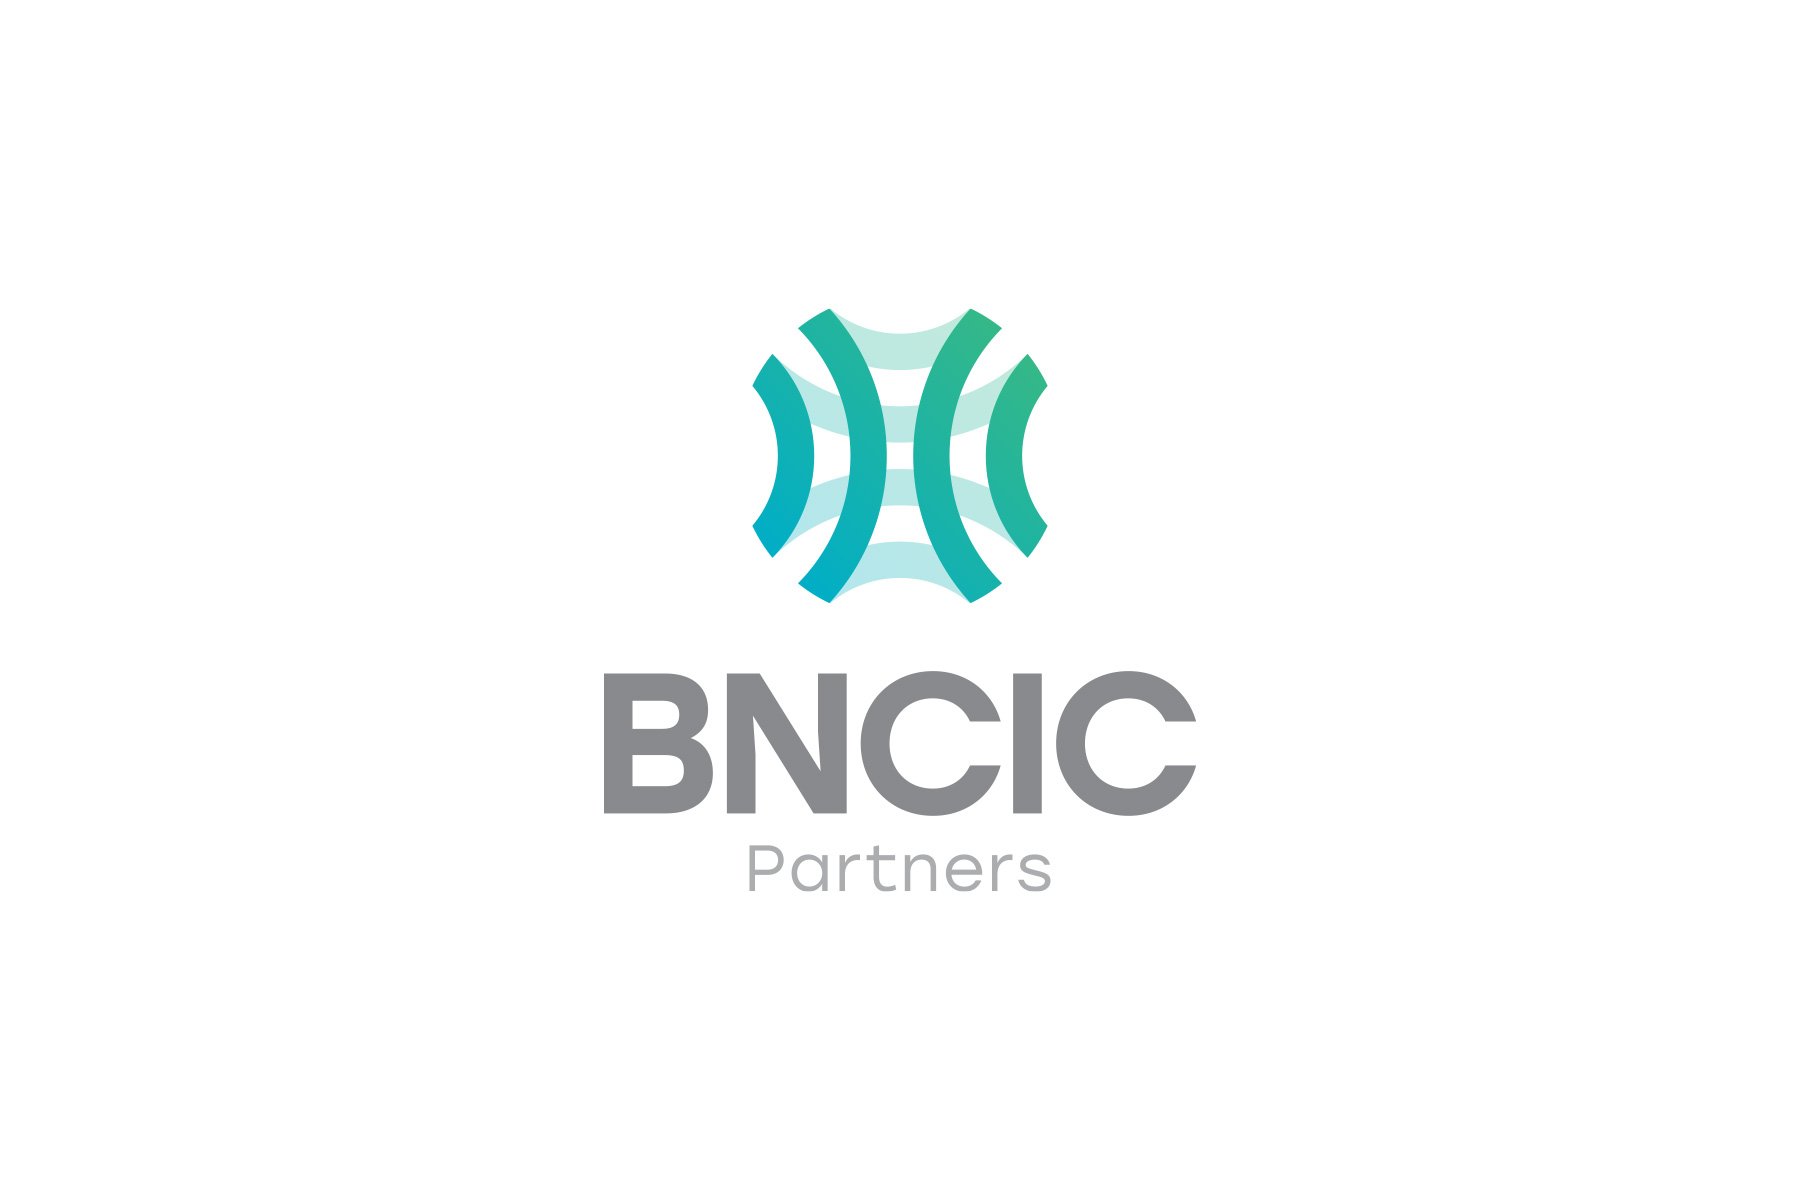 BNCIC Partners Logo Design